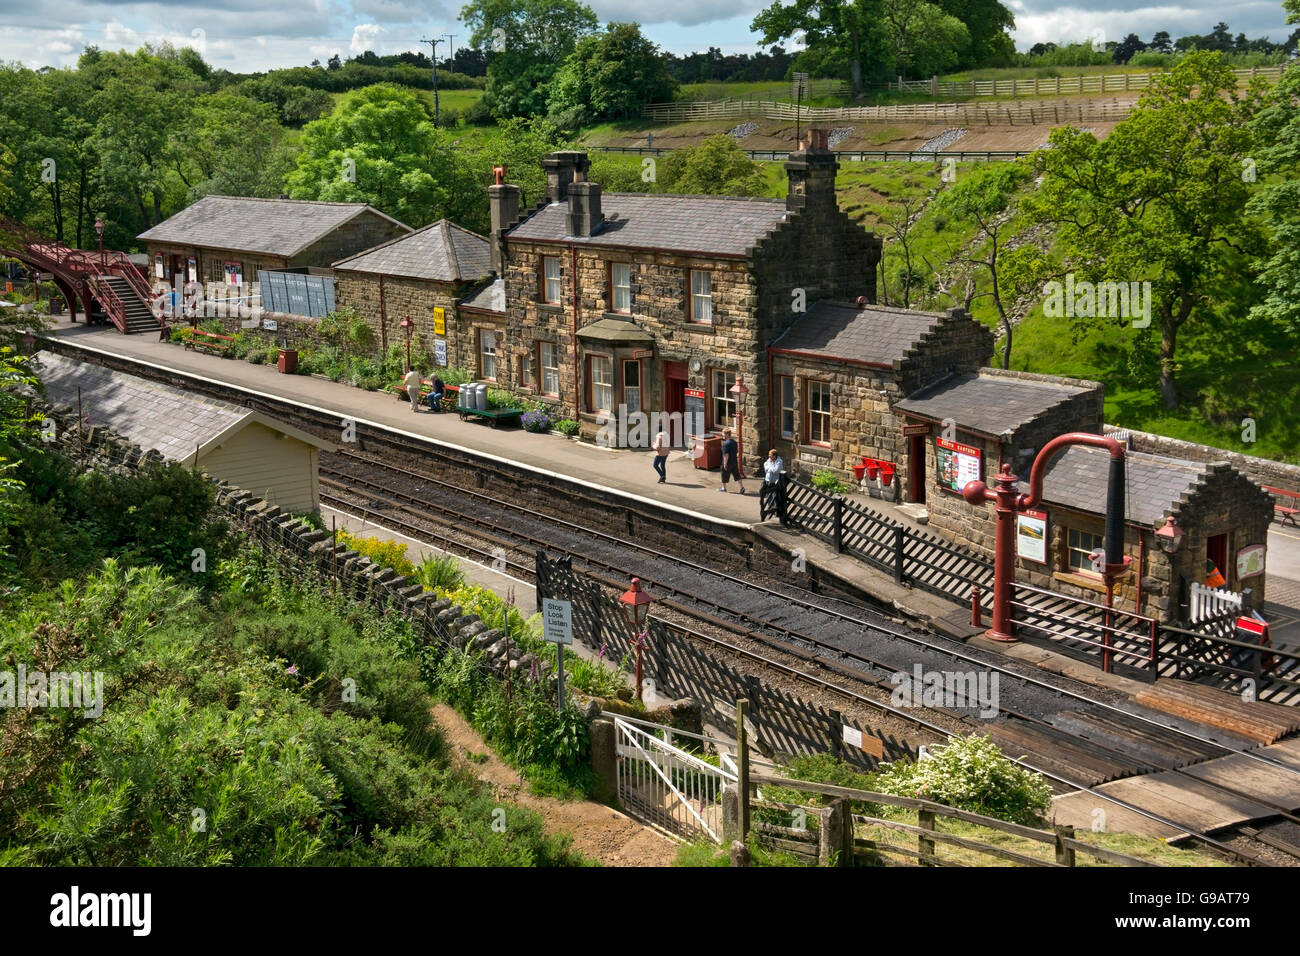 Goathland Station Yorkshire Moors (Hogsmeade station from Harry Potter) Stock Photo